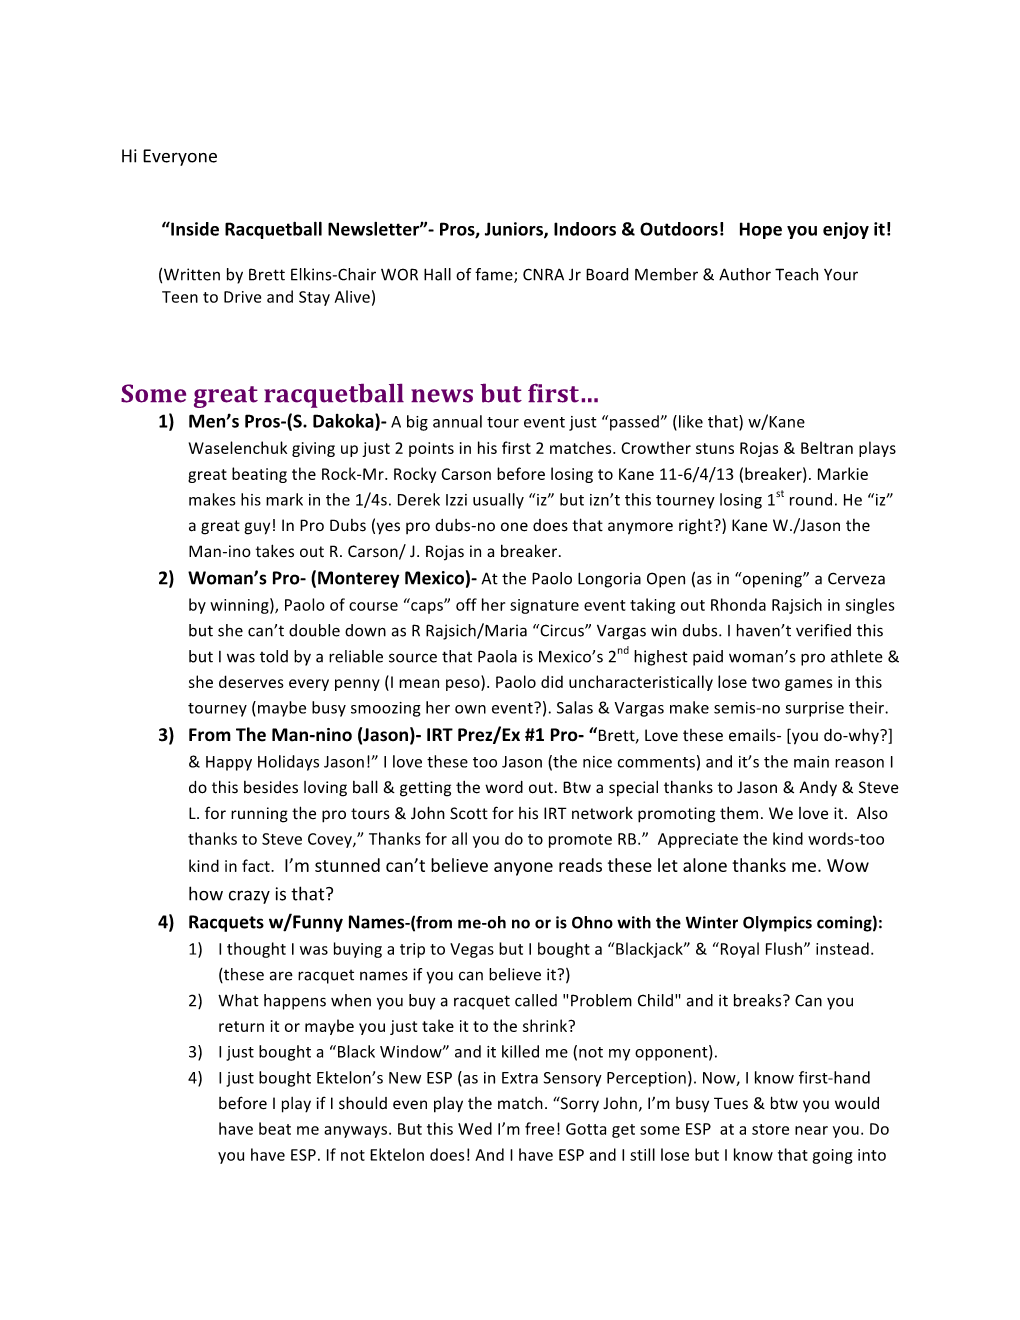 February Newsletter for Racquetball Revised